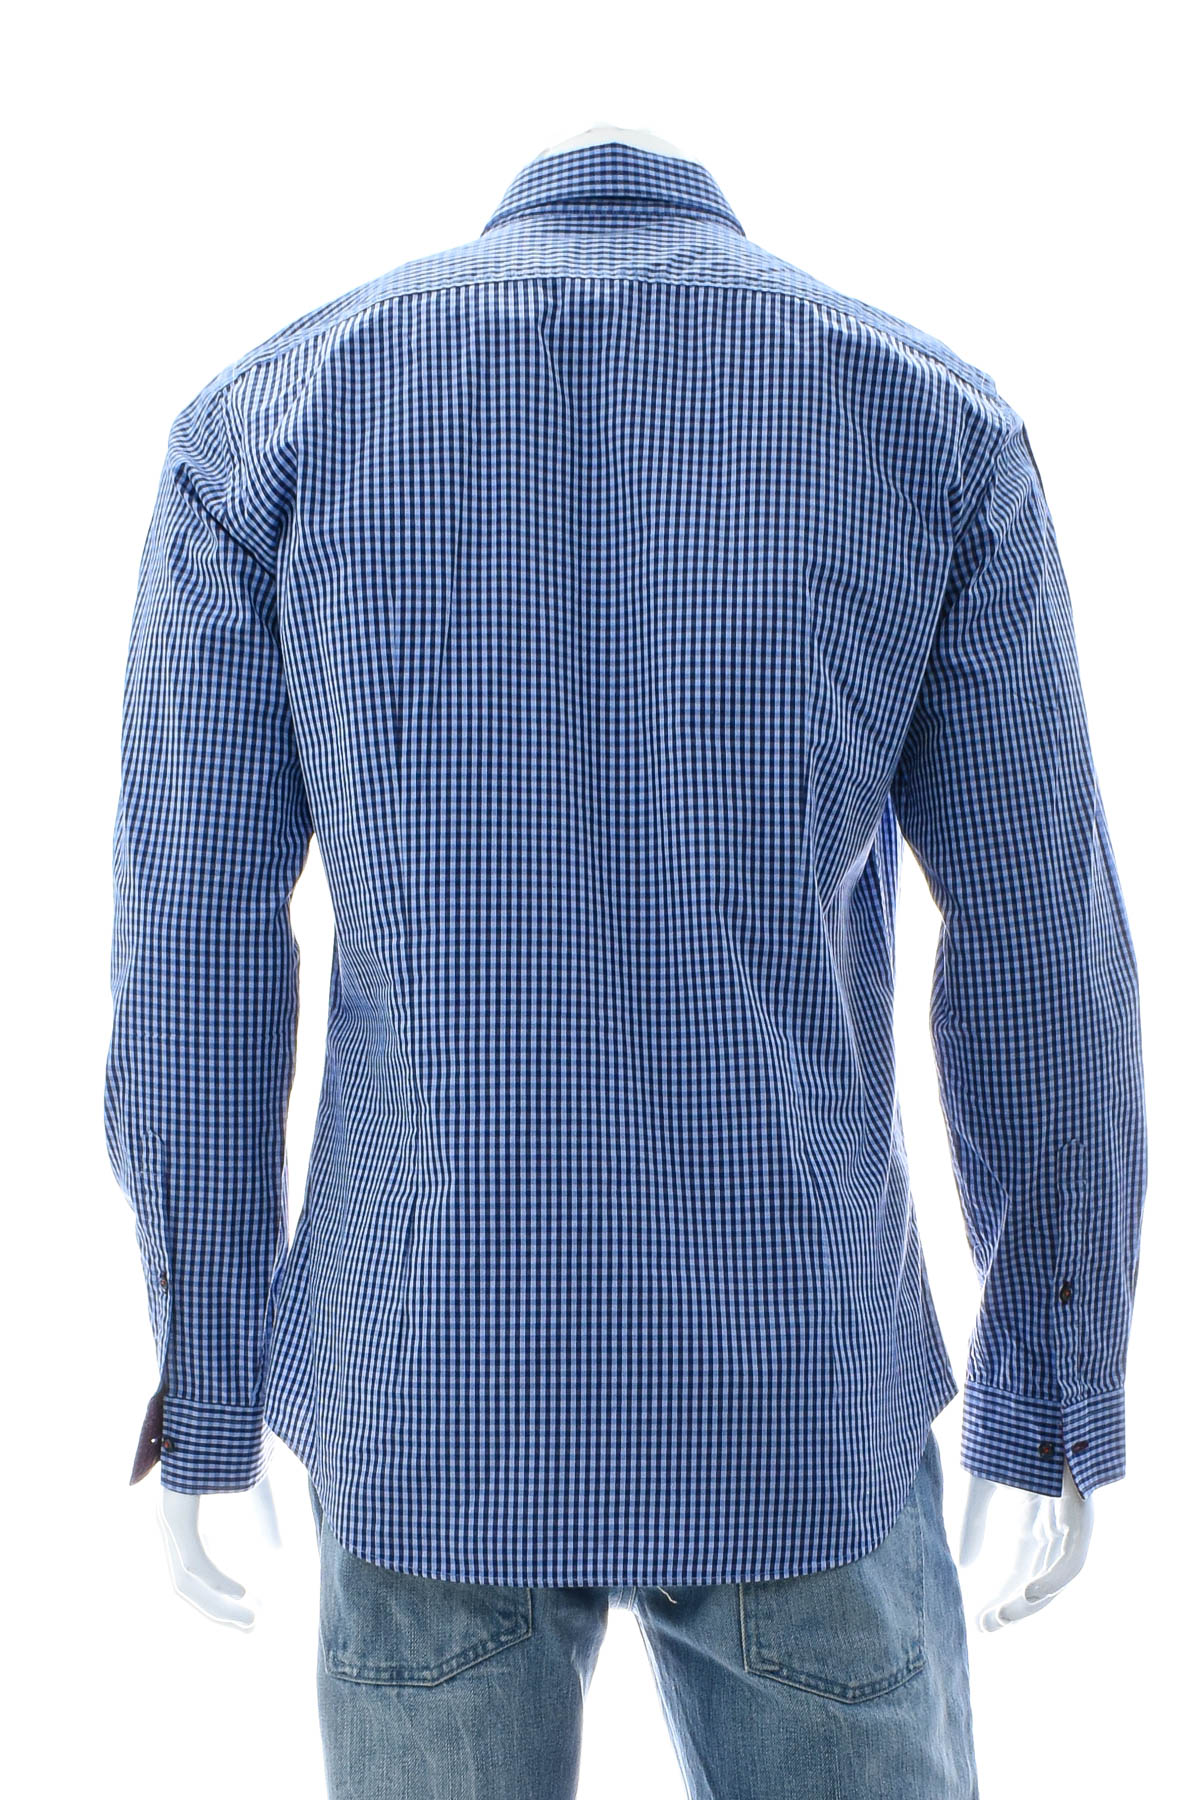 Men's shirt - Redford - 1